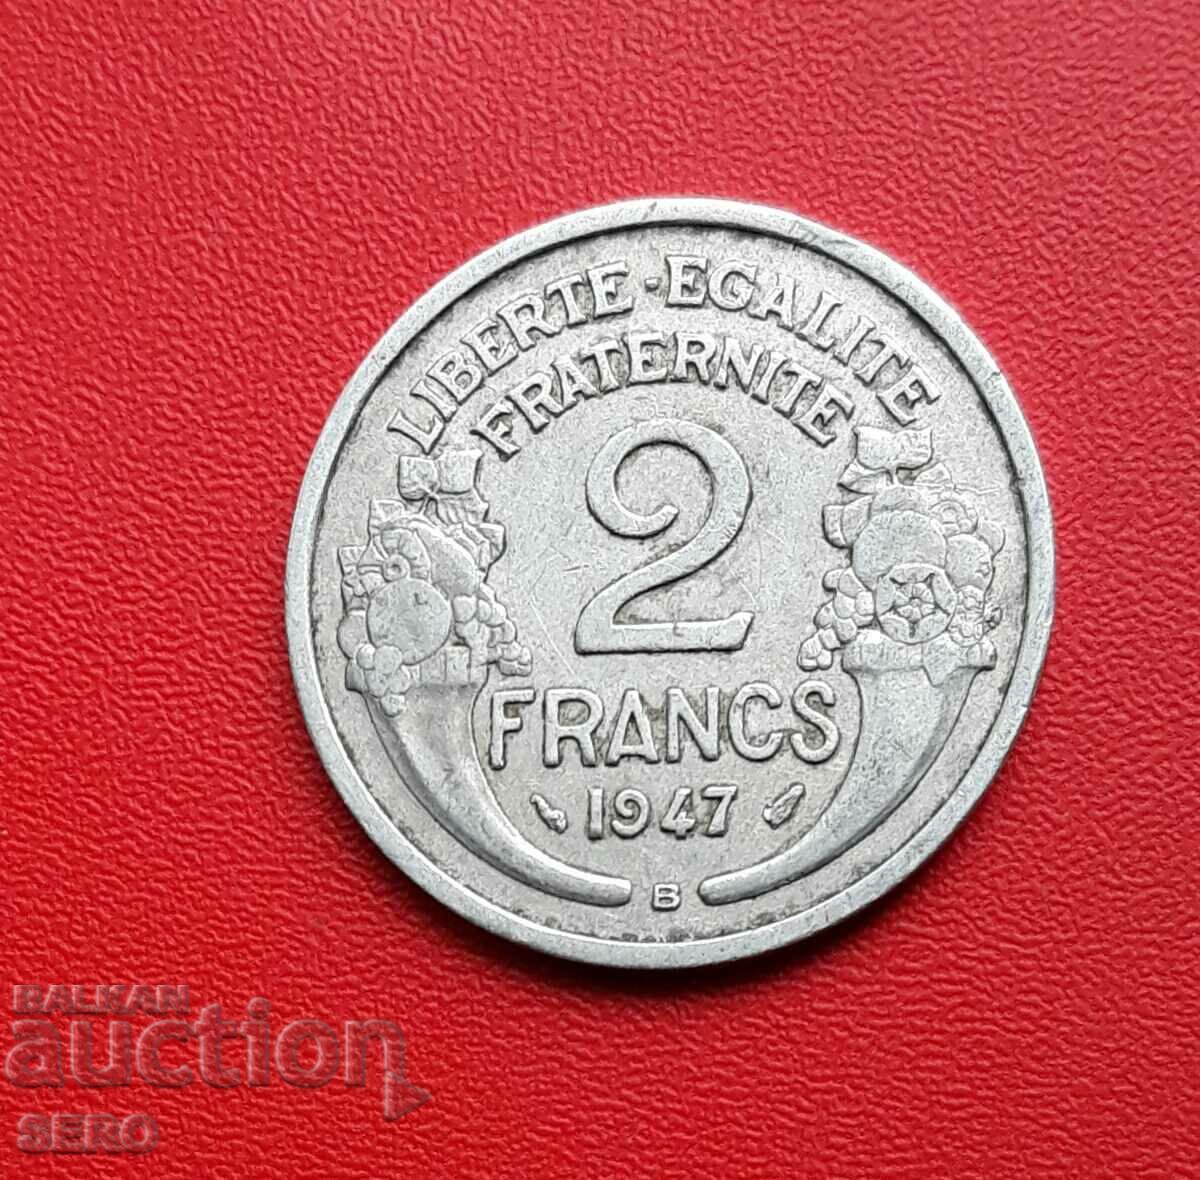 Franta-2 franci 1947 In-Beaumont le Roger